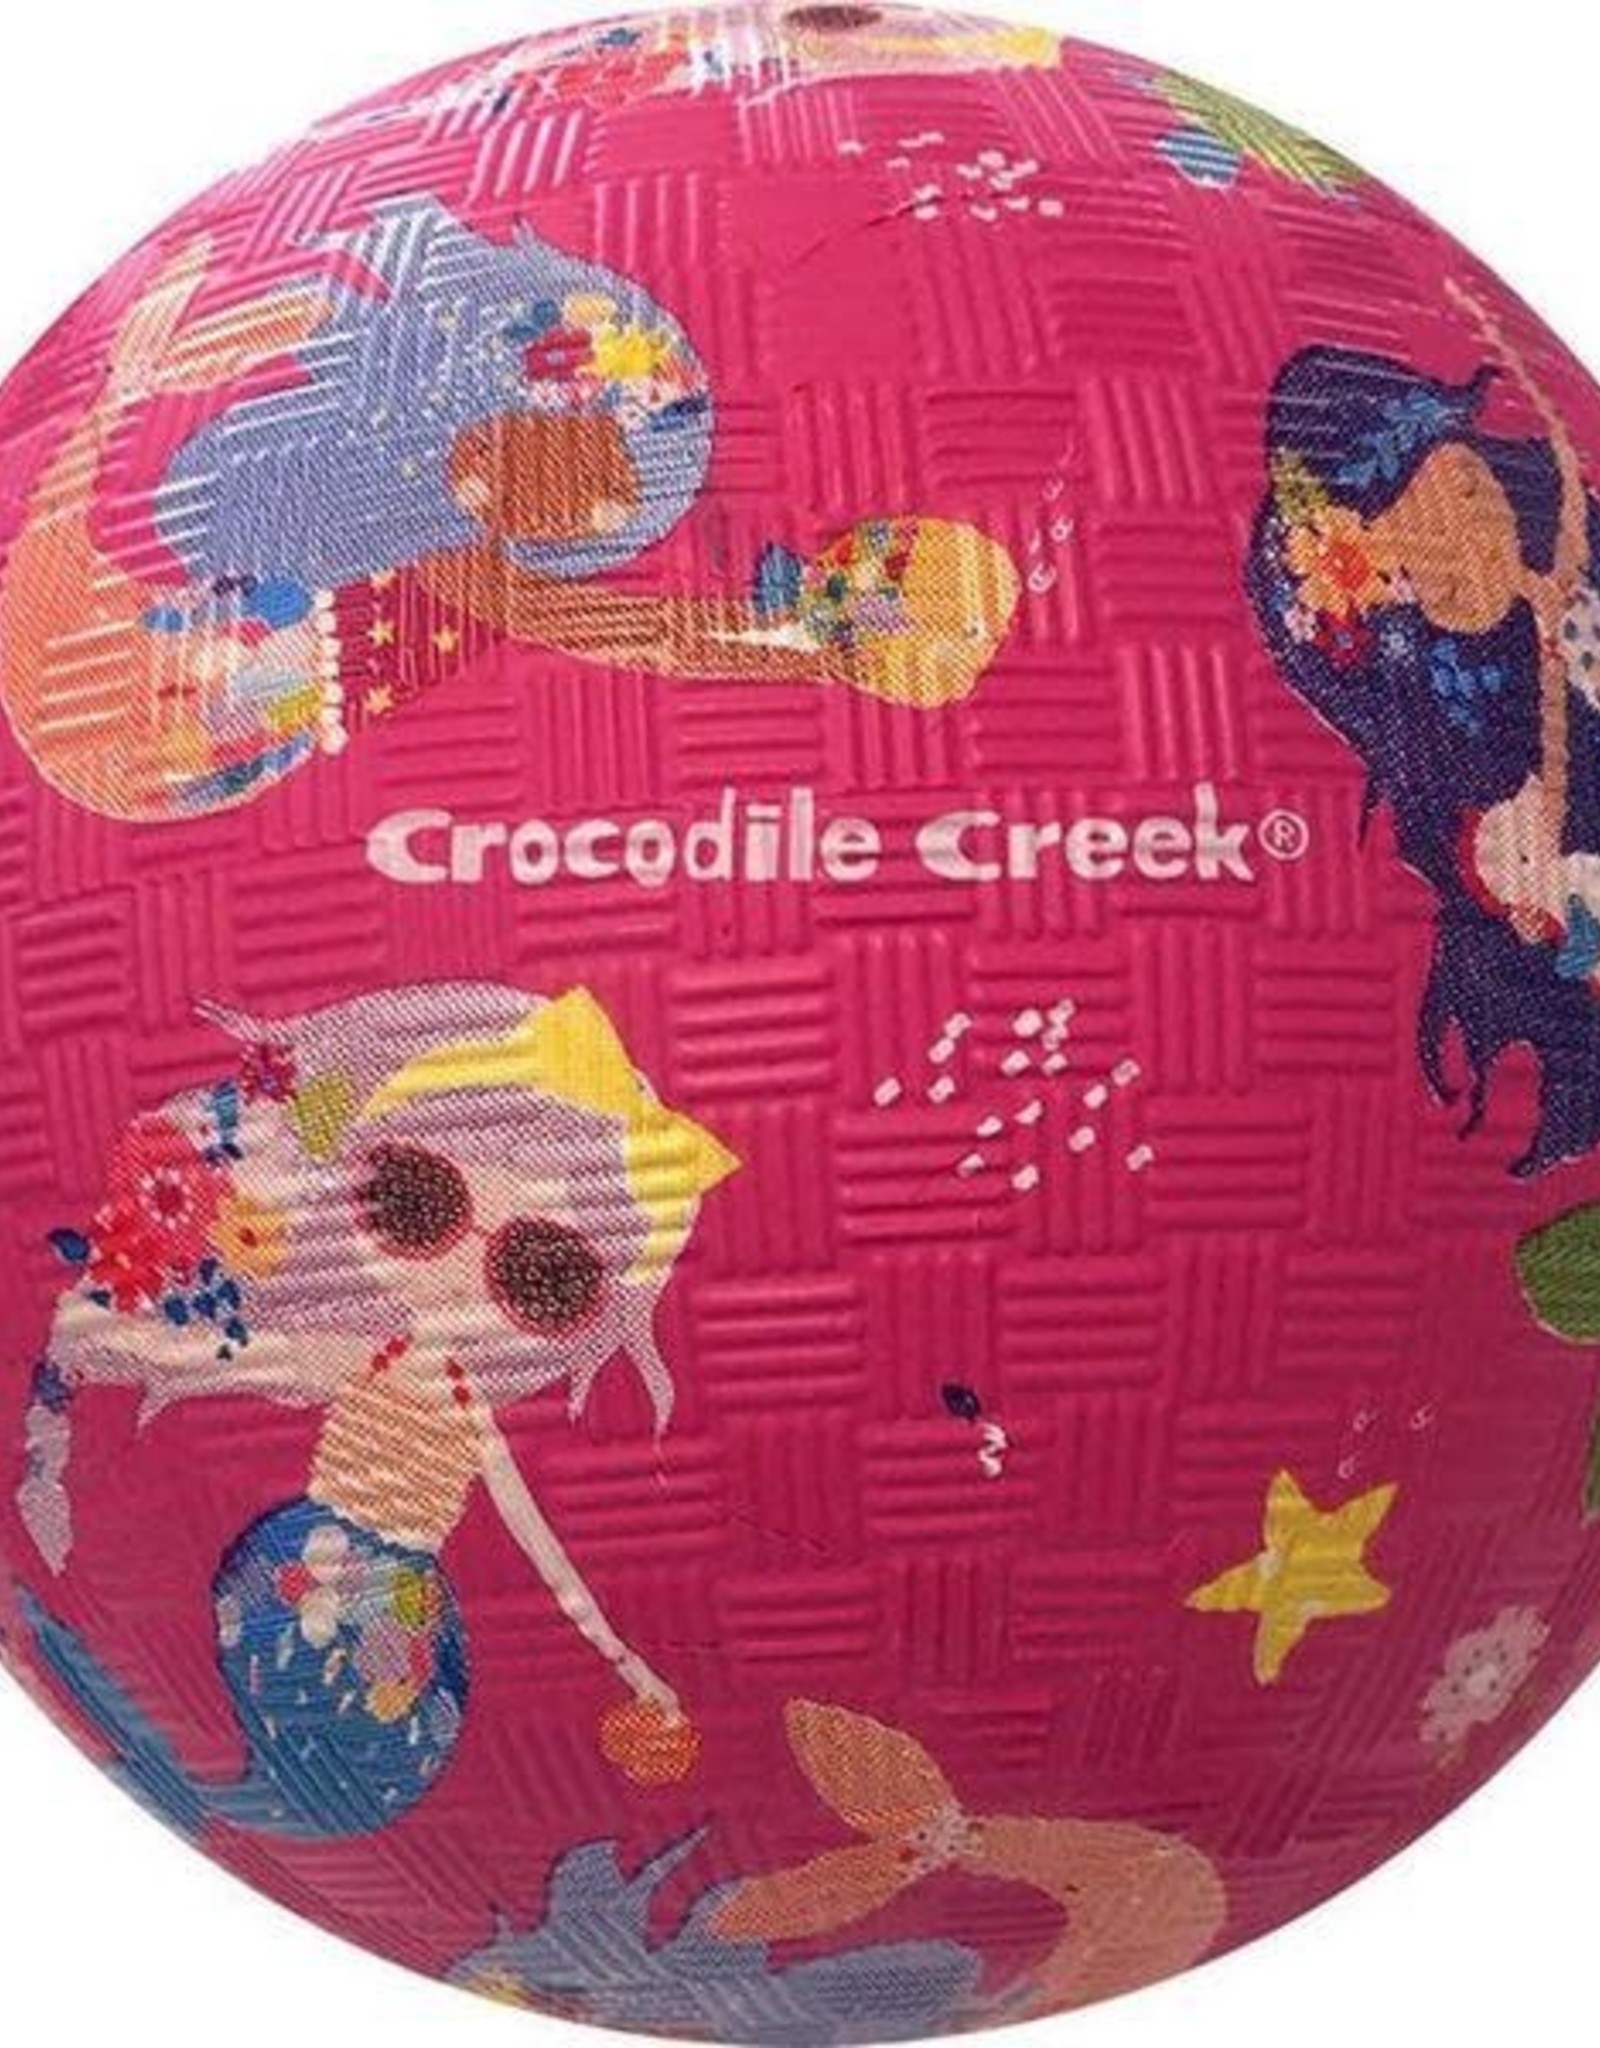 Crocodile Creek 7" Playball: Mermaids